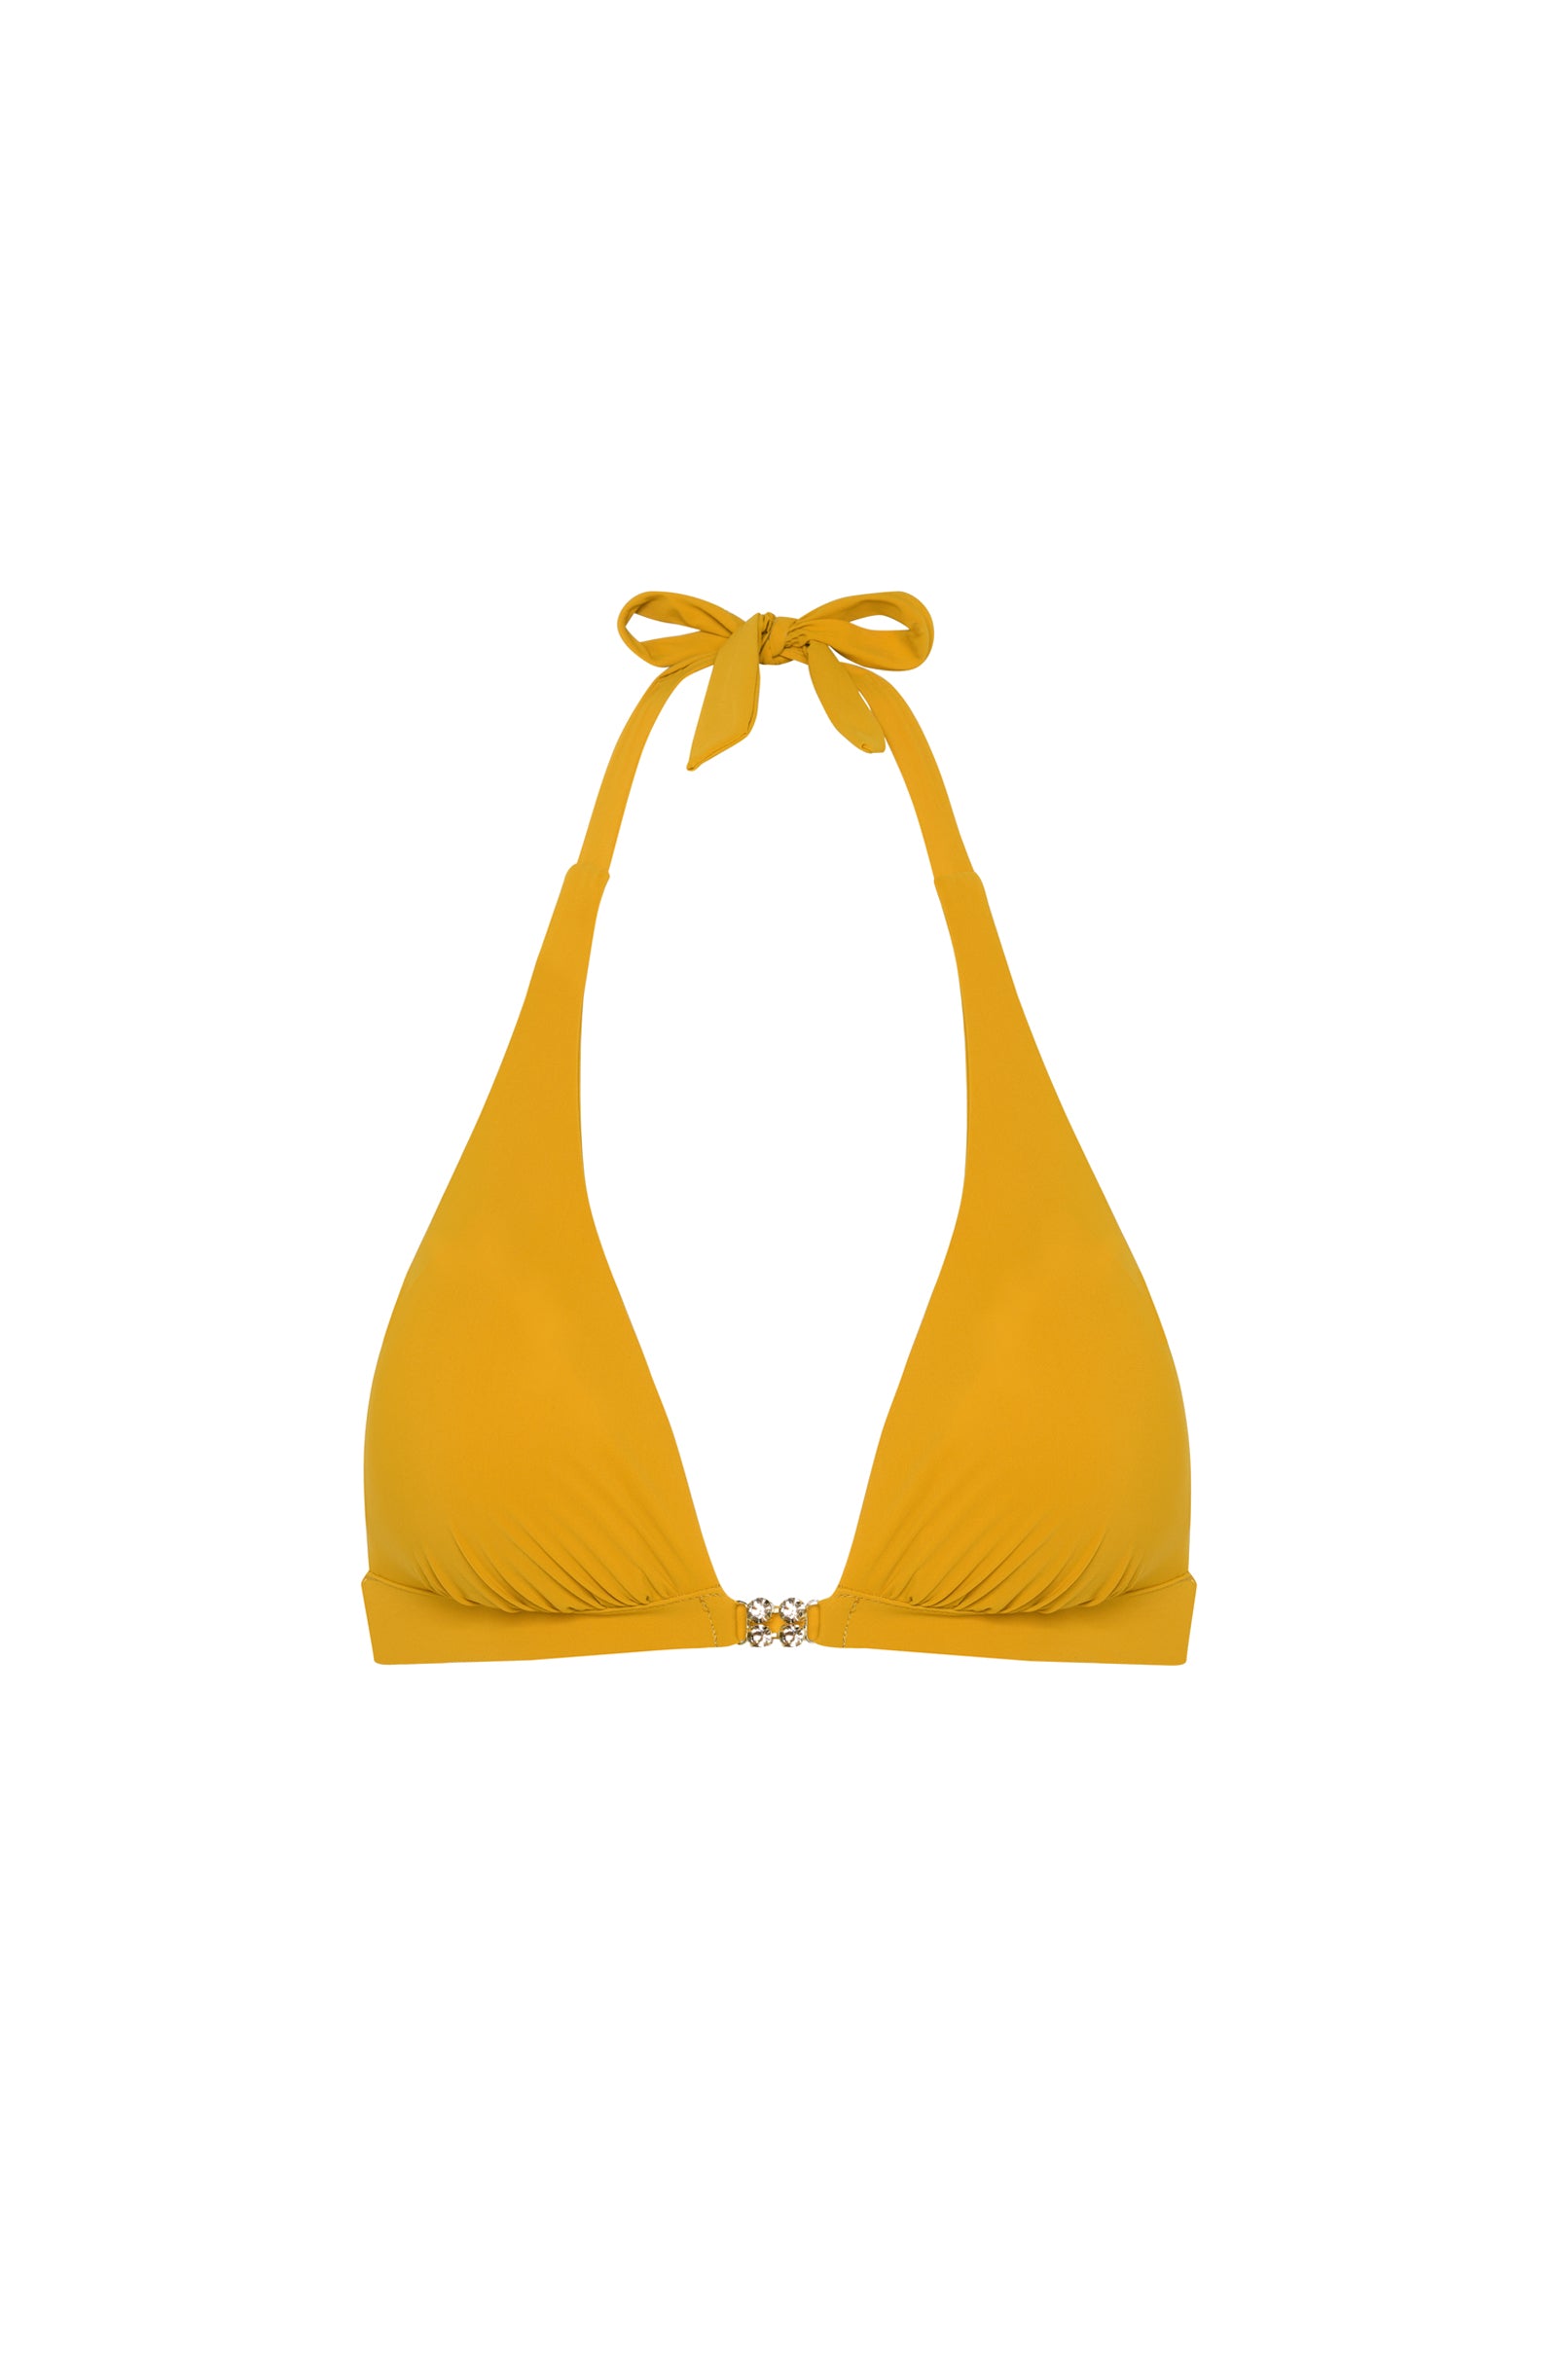 anea Ochre triangle bikini top with jewels